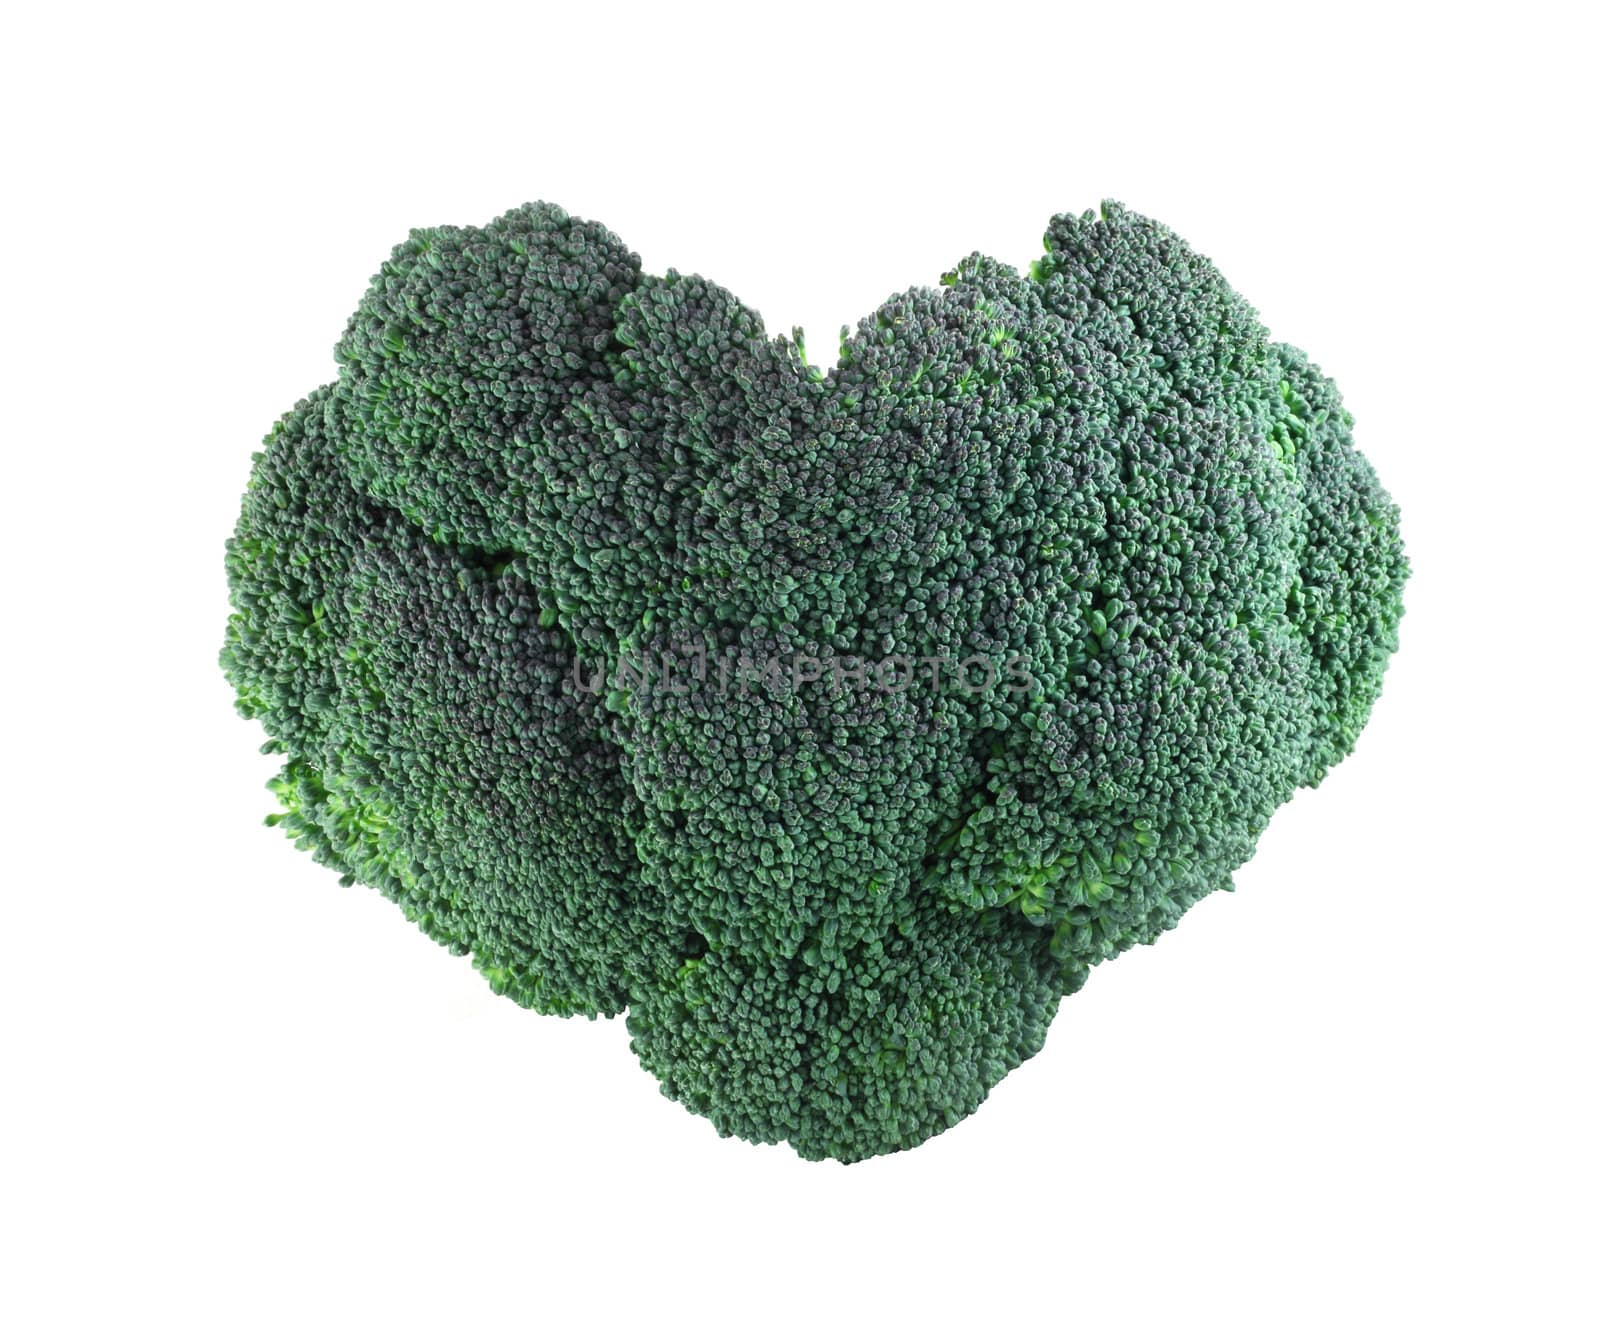 Heart shaped Broccoli on white by destillat